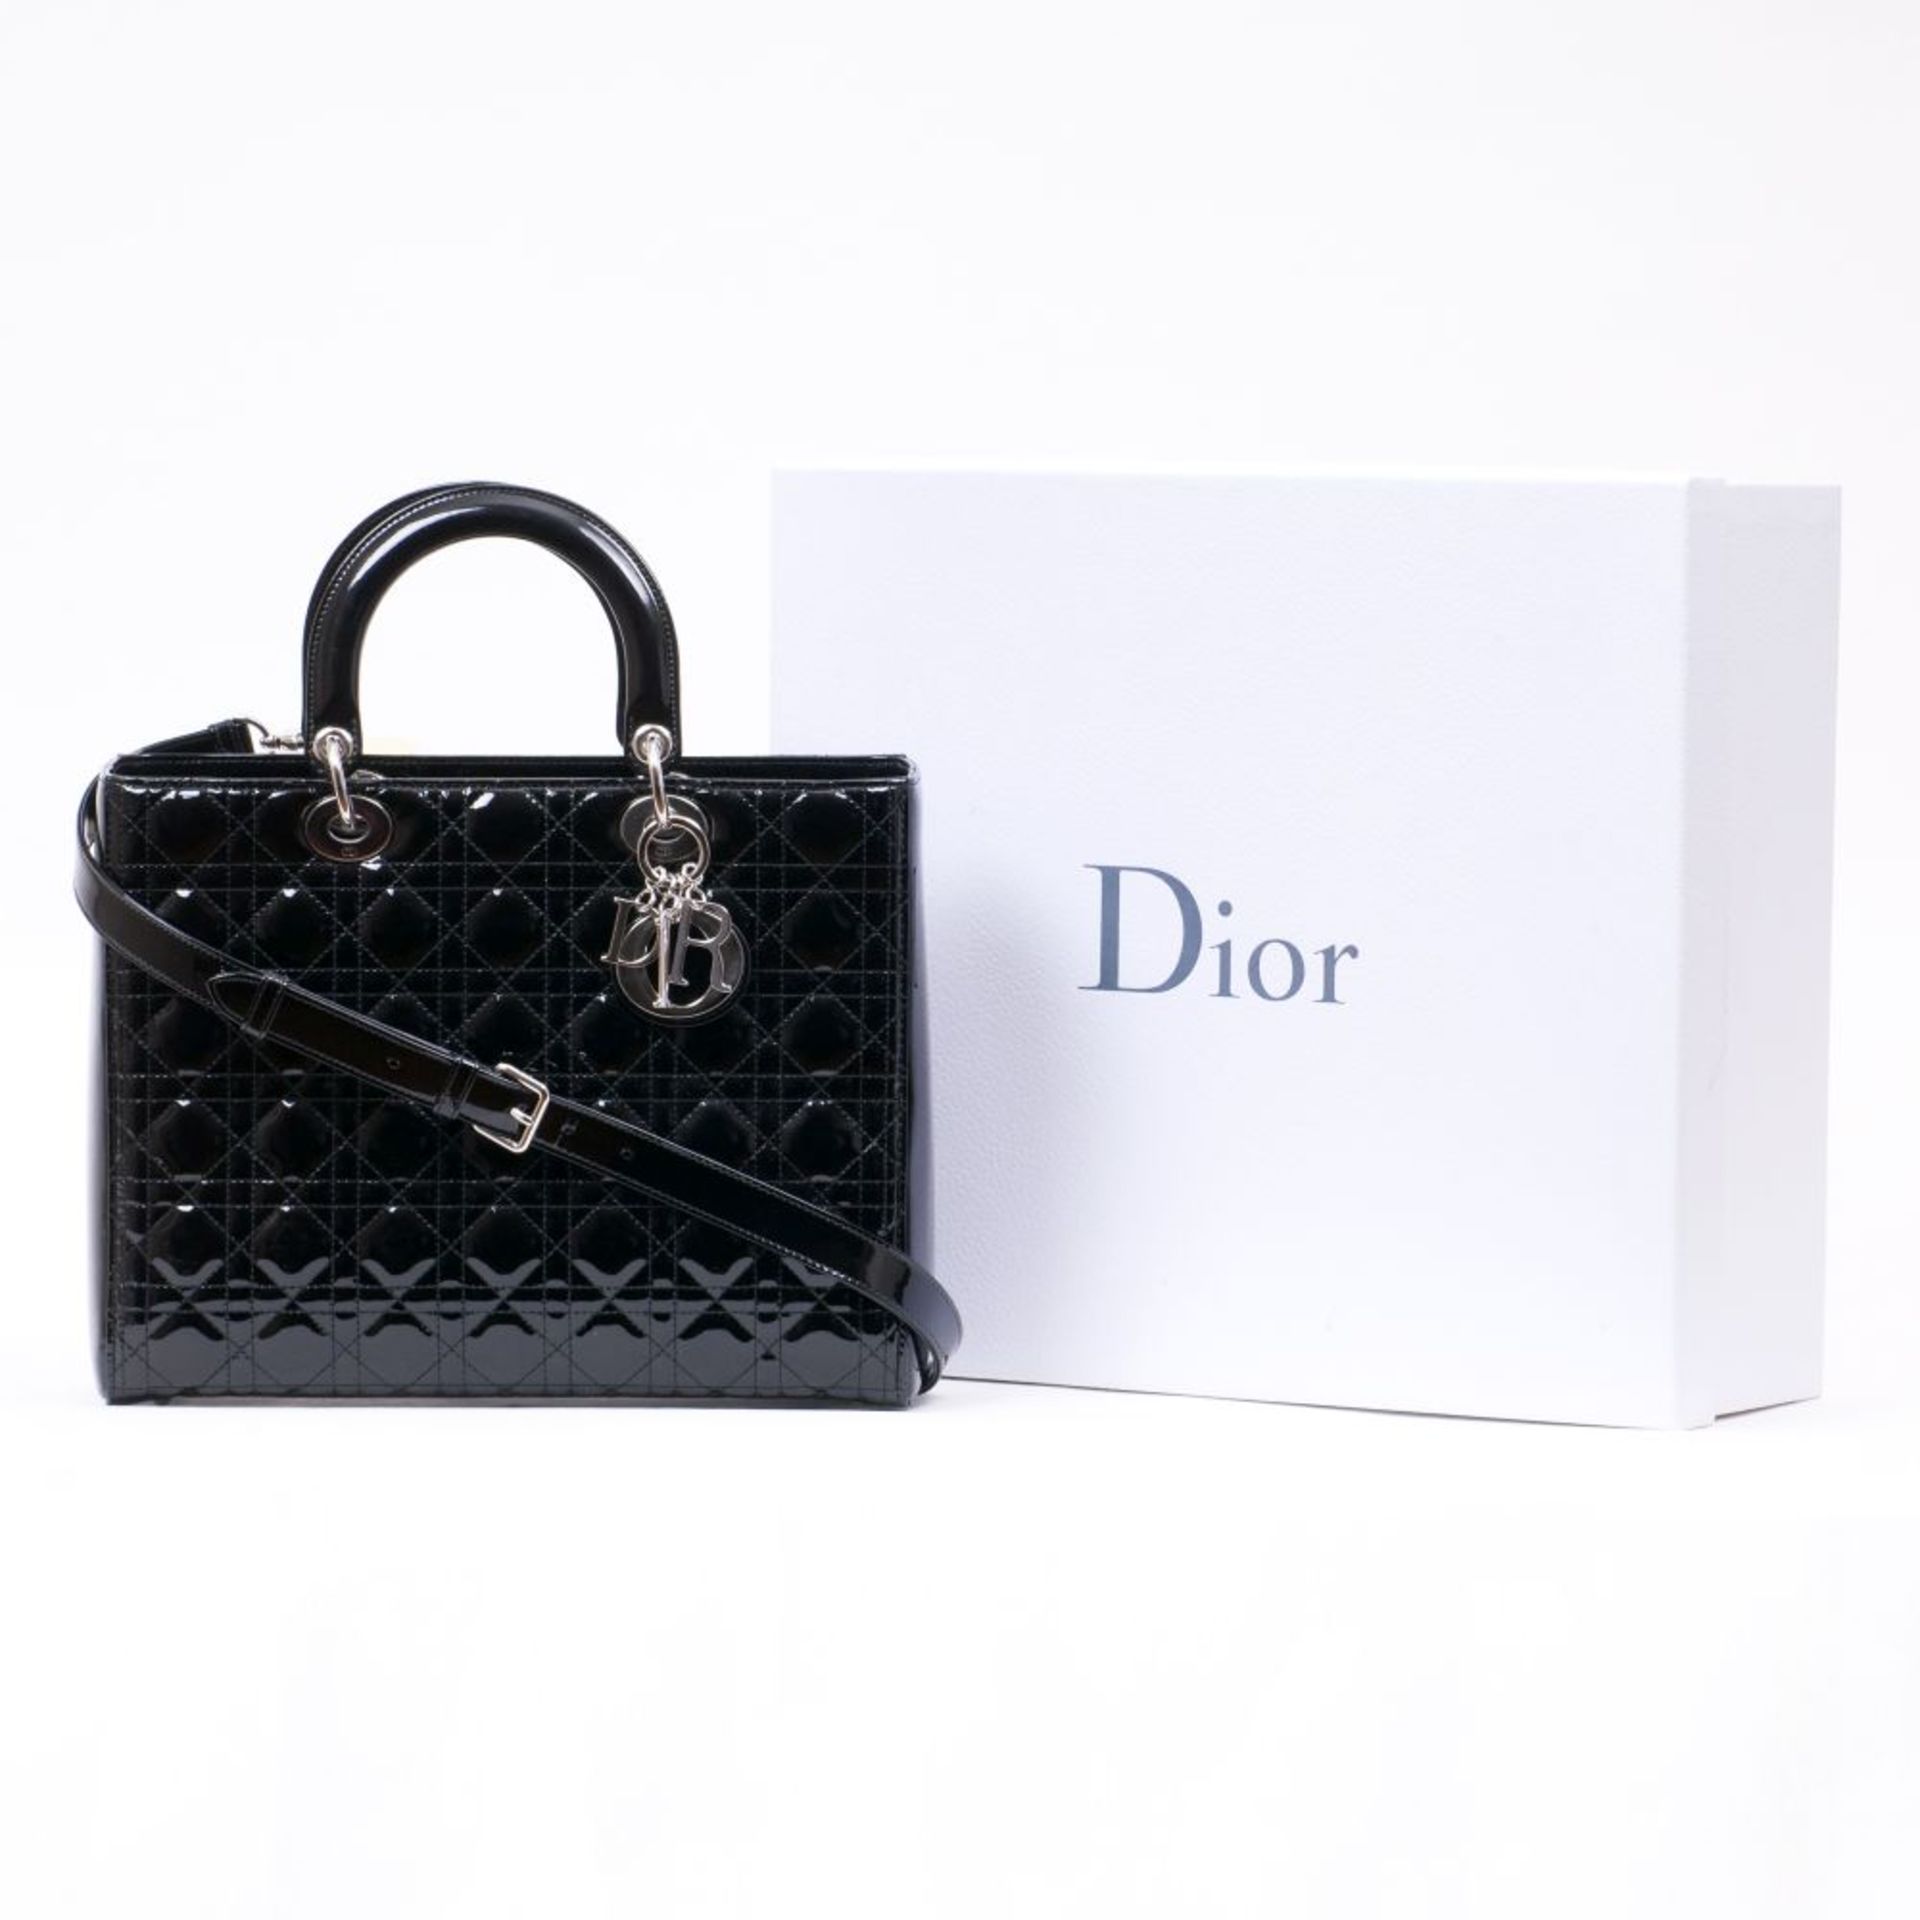 Christian Dior. Lady Dior Bag Black. - Image 2 of 2